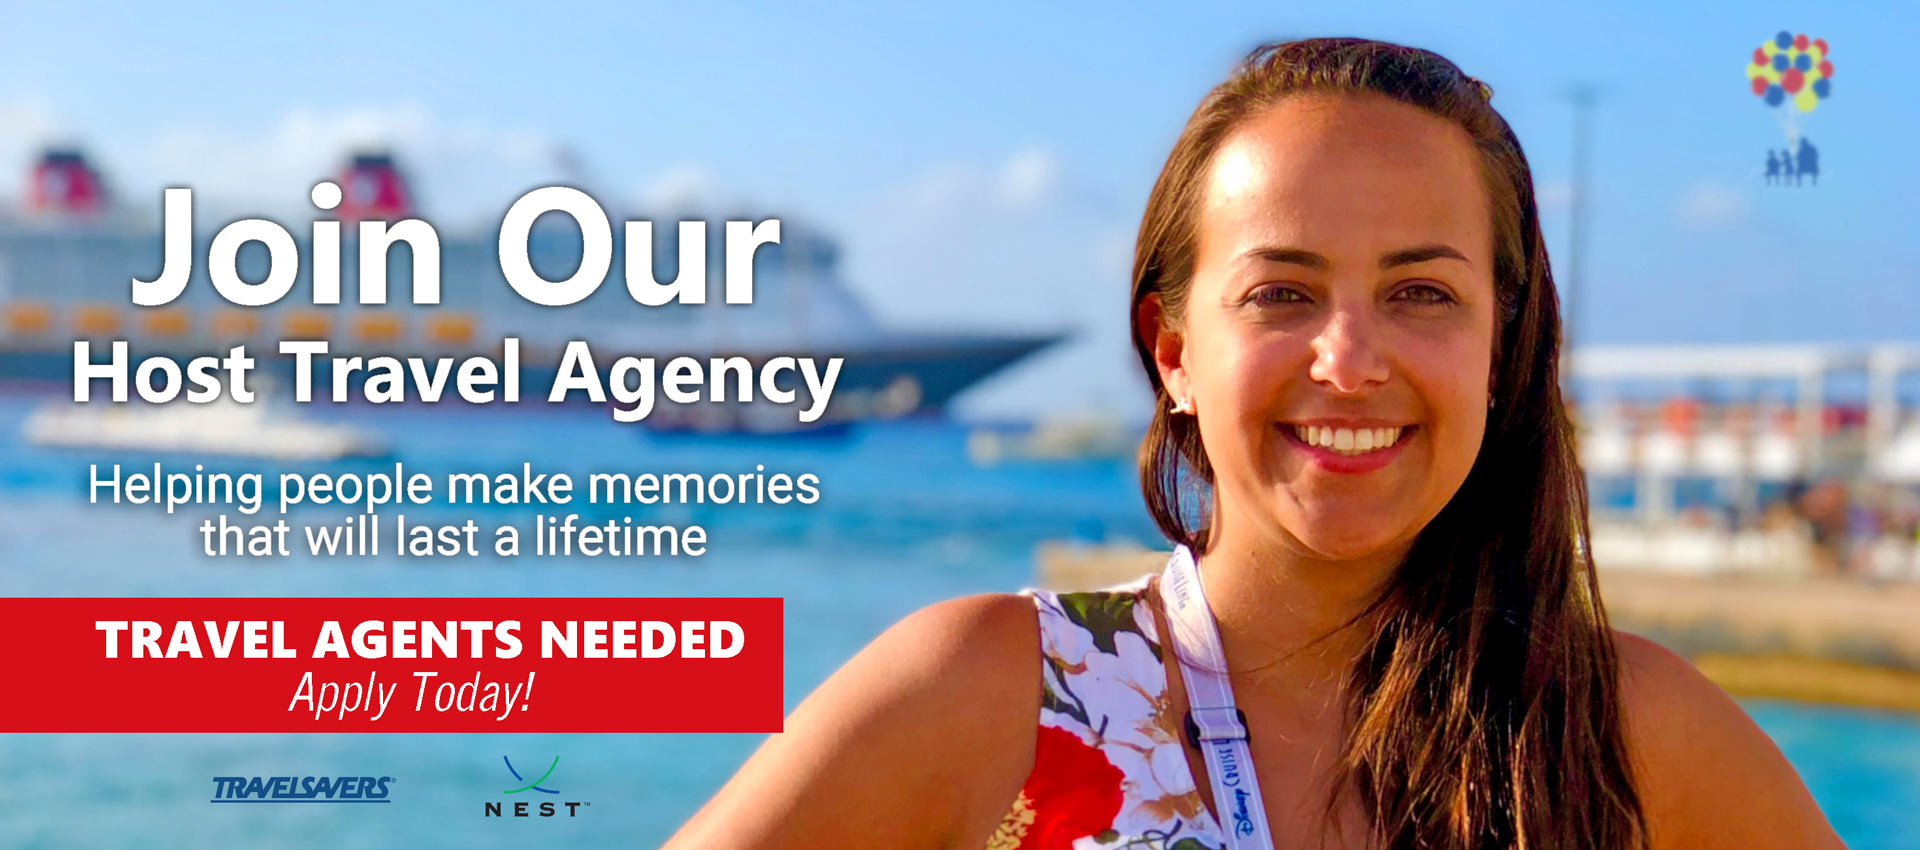 linkedin for travel agents